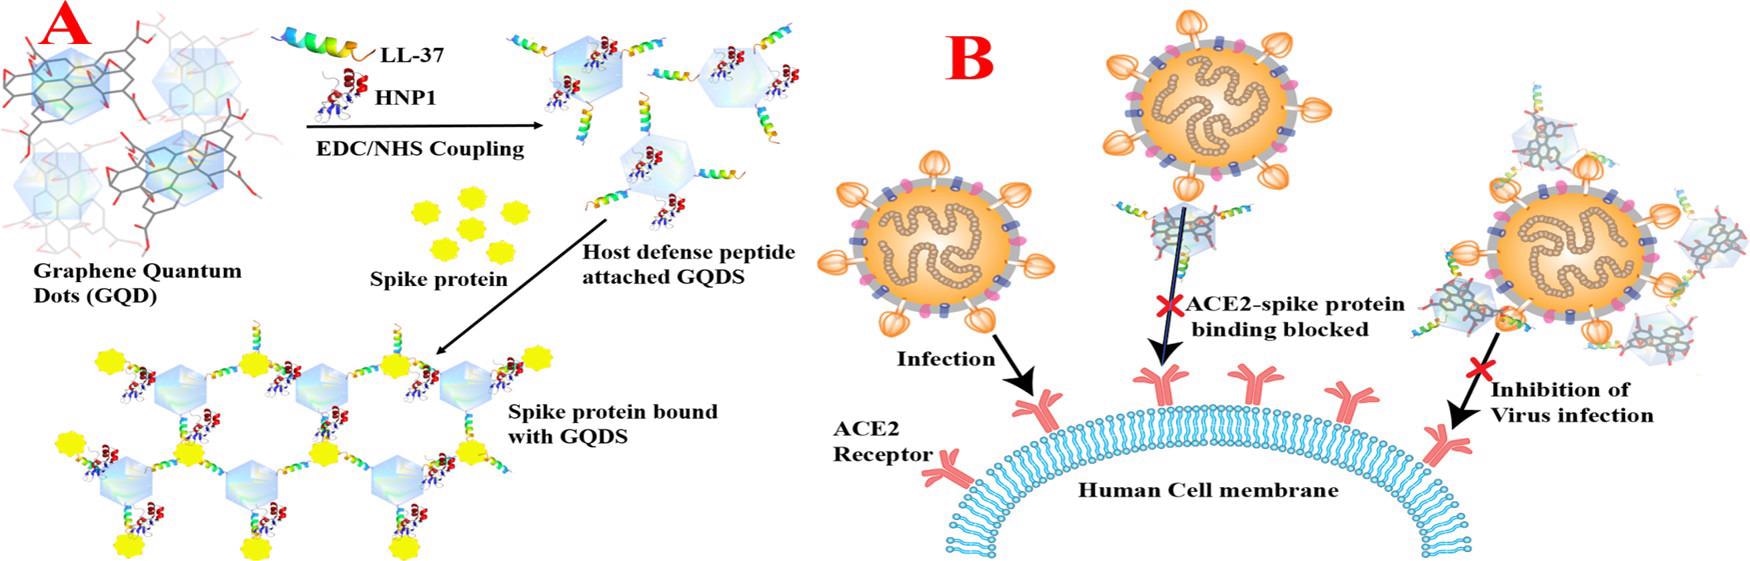 （A）方案显示了HNP1和LL-37人宿主防御肽偶联GQD的设计以及在SARS-CoV-2δ变体（B.1.617.2）刺突蛋白RBD存在下HNP1和LL-37肽偶联GQD的结合。（B）显示阻断S-RBD与ACE2在人细胞膜上的相互作用并防止SARS-CoV-2病毒进入的方案。